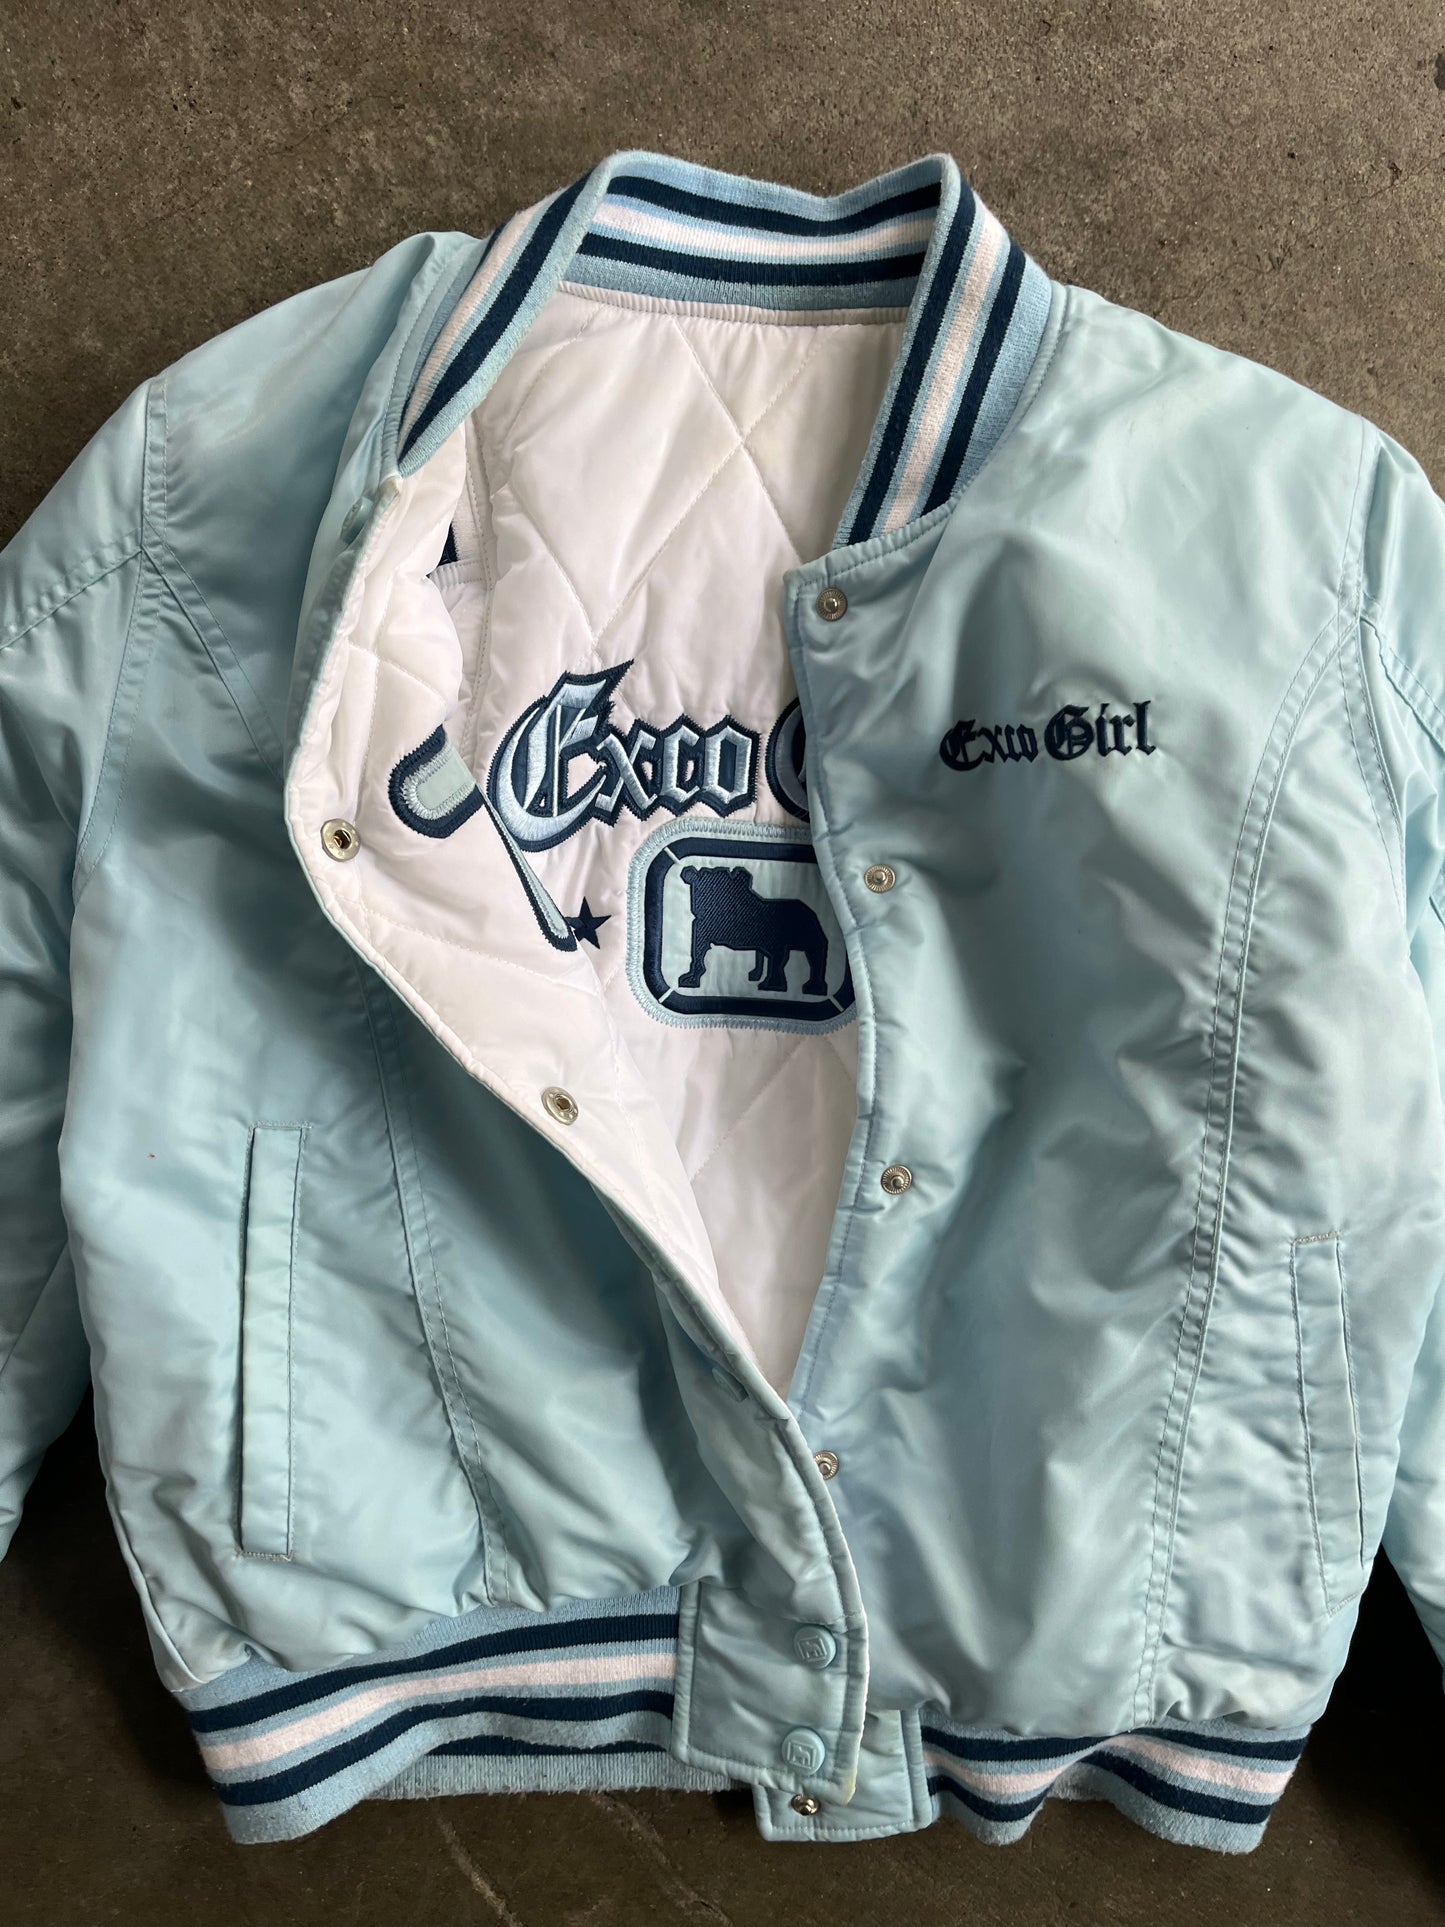 (XS) Exco Girl Reversible Varsity Jacket